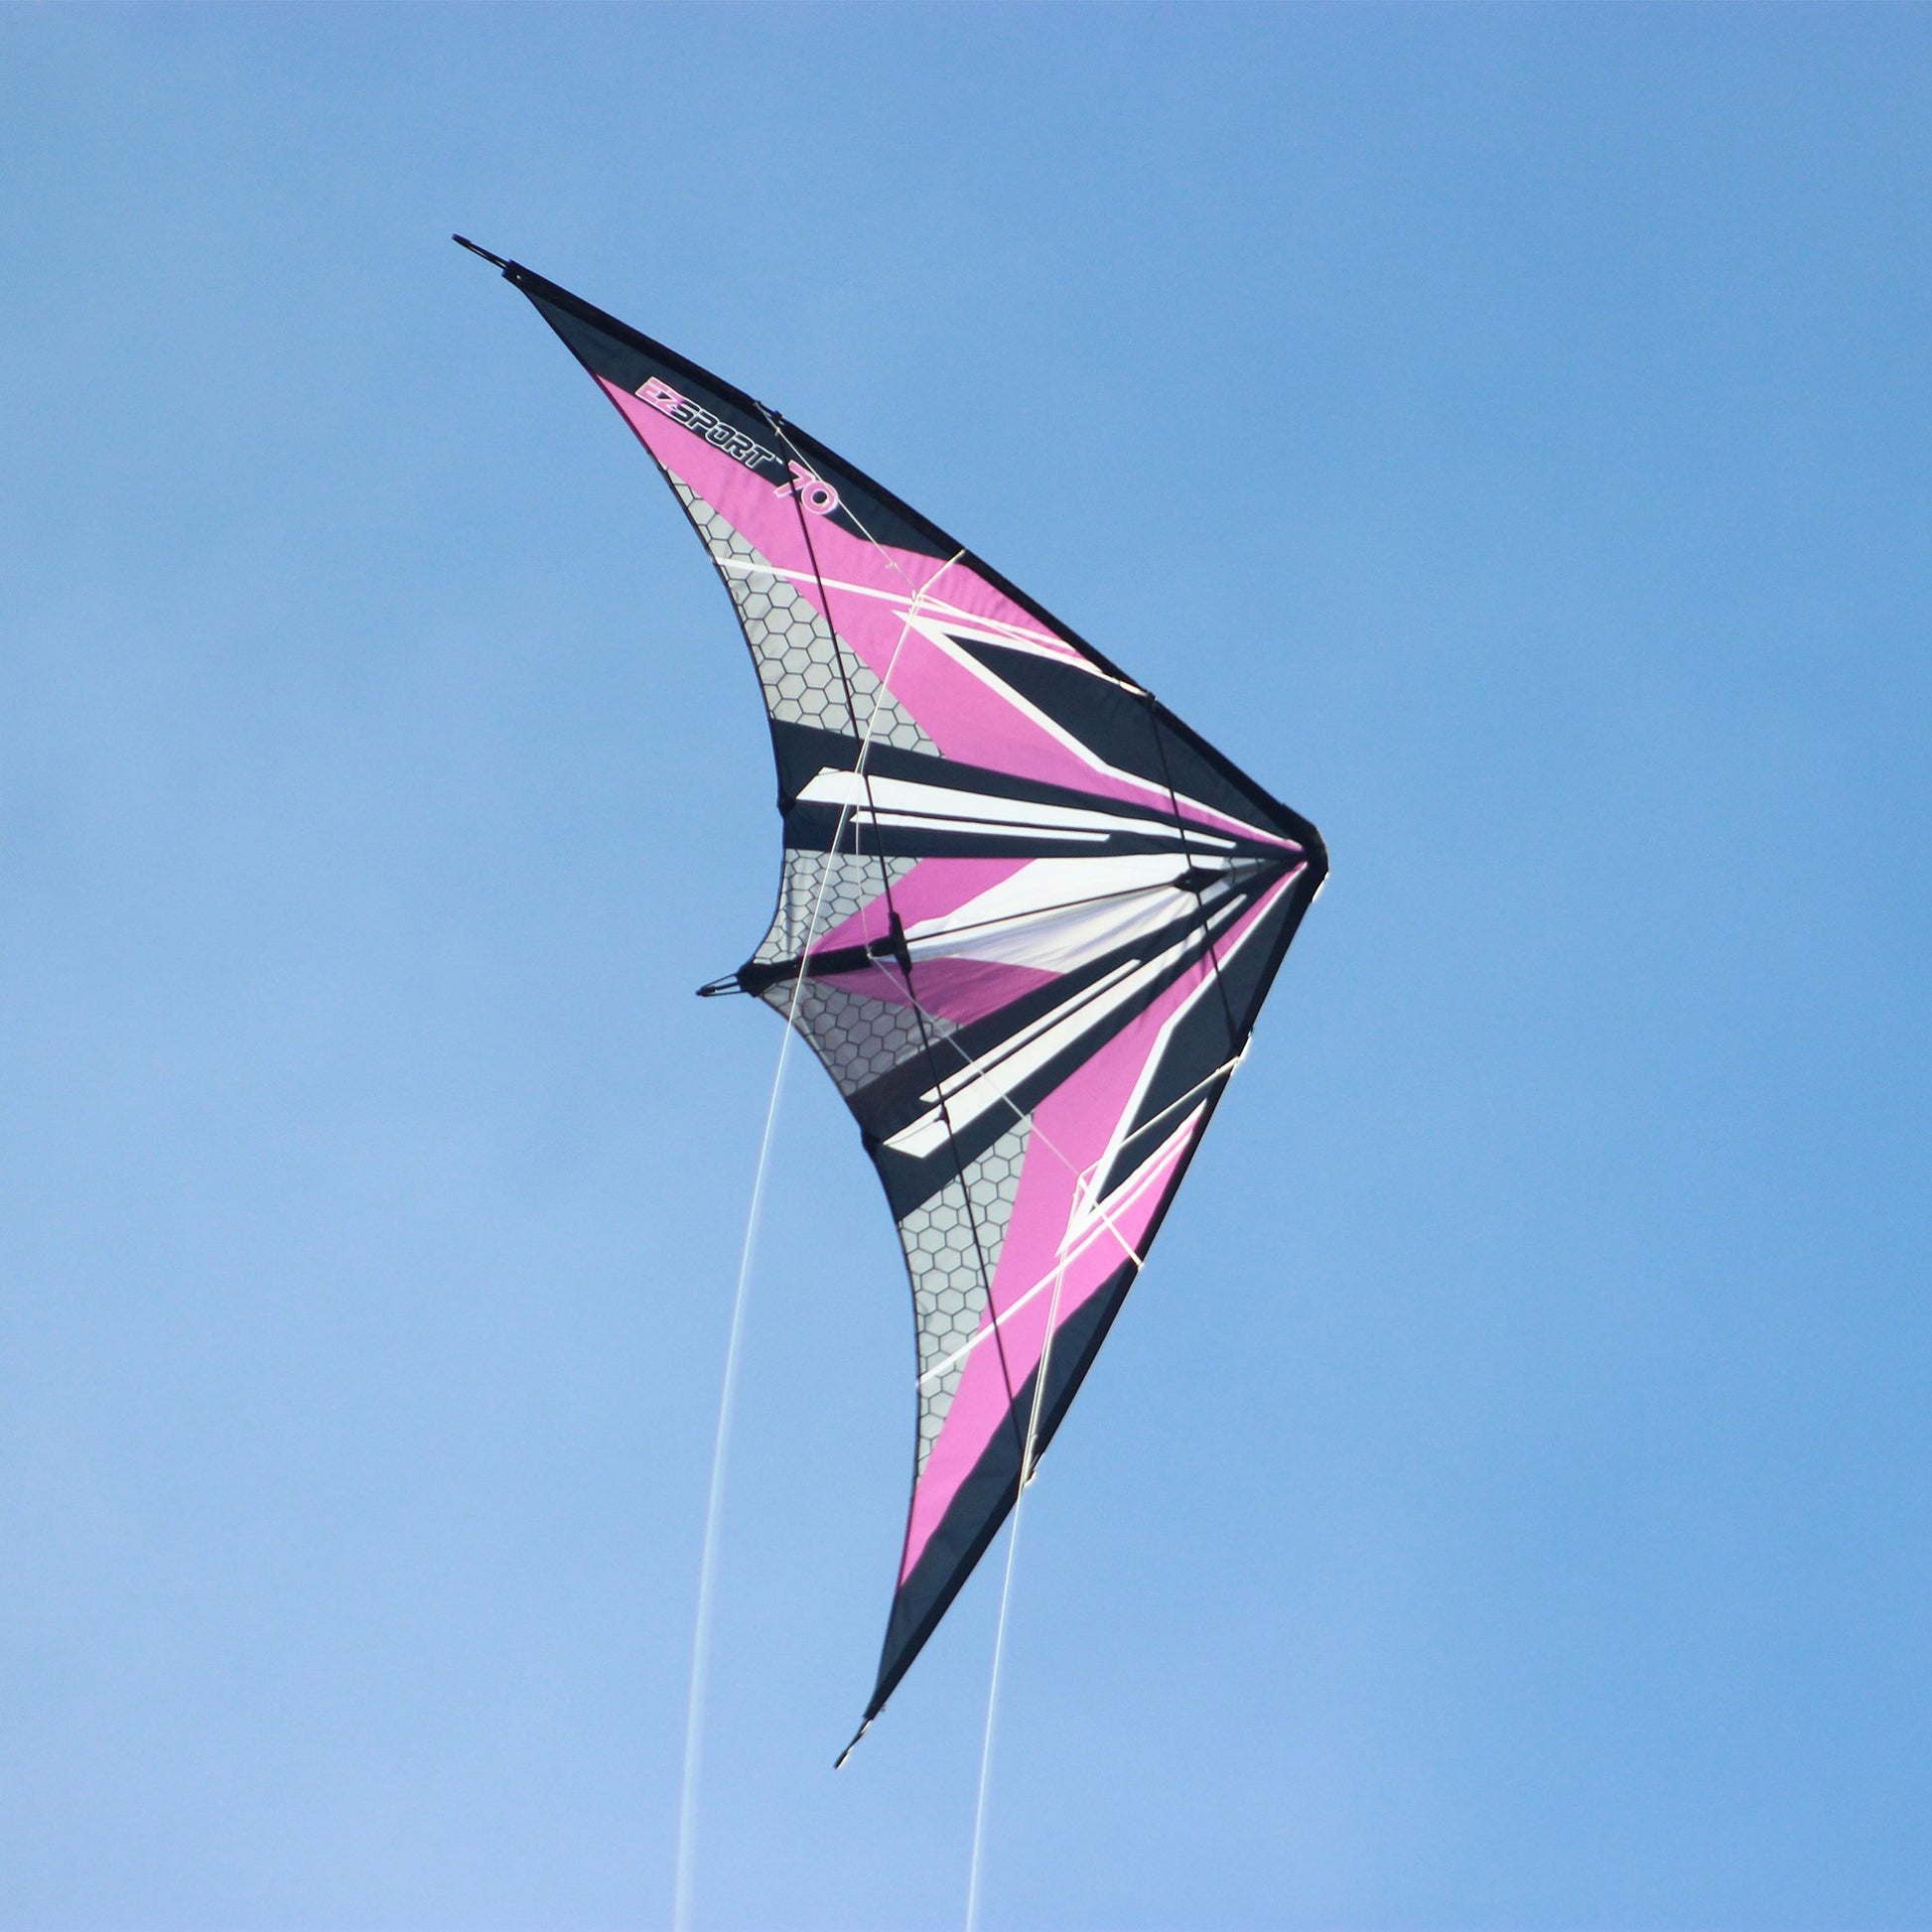 WindNSun EZ Sport 70 Dual Control Sport Kite Purple Hexagon Nylon Kite photo of product in use